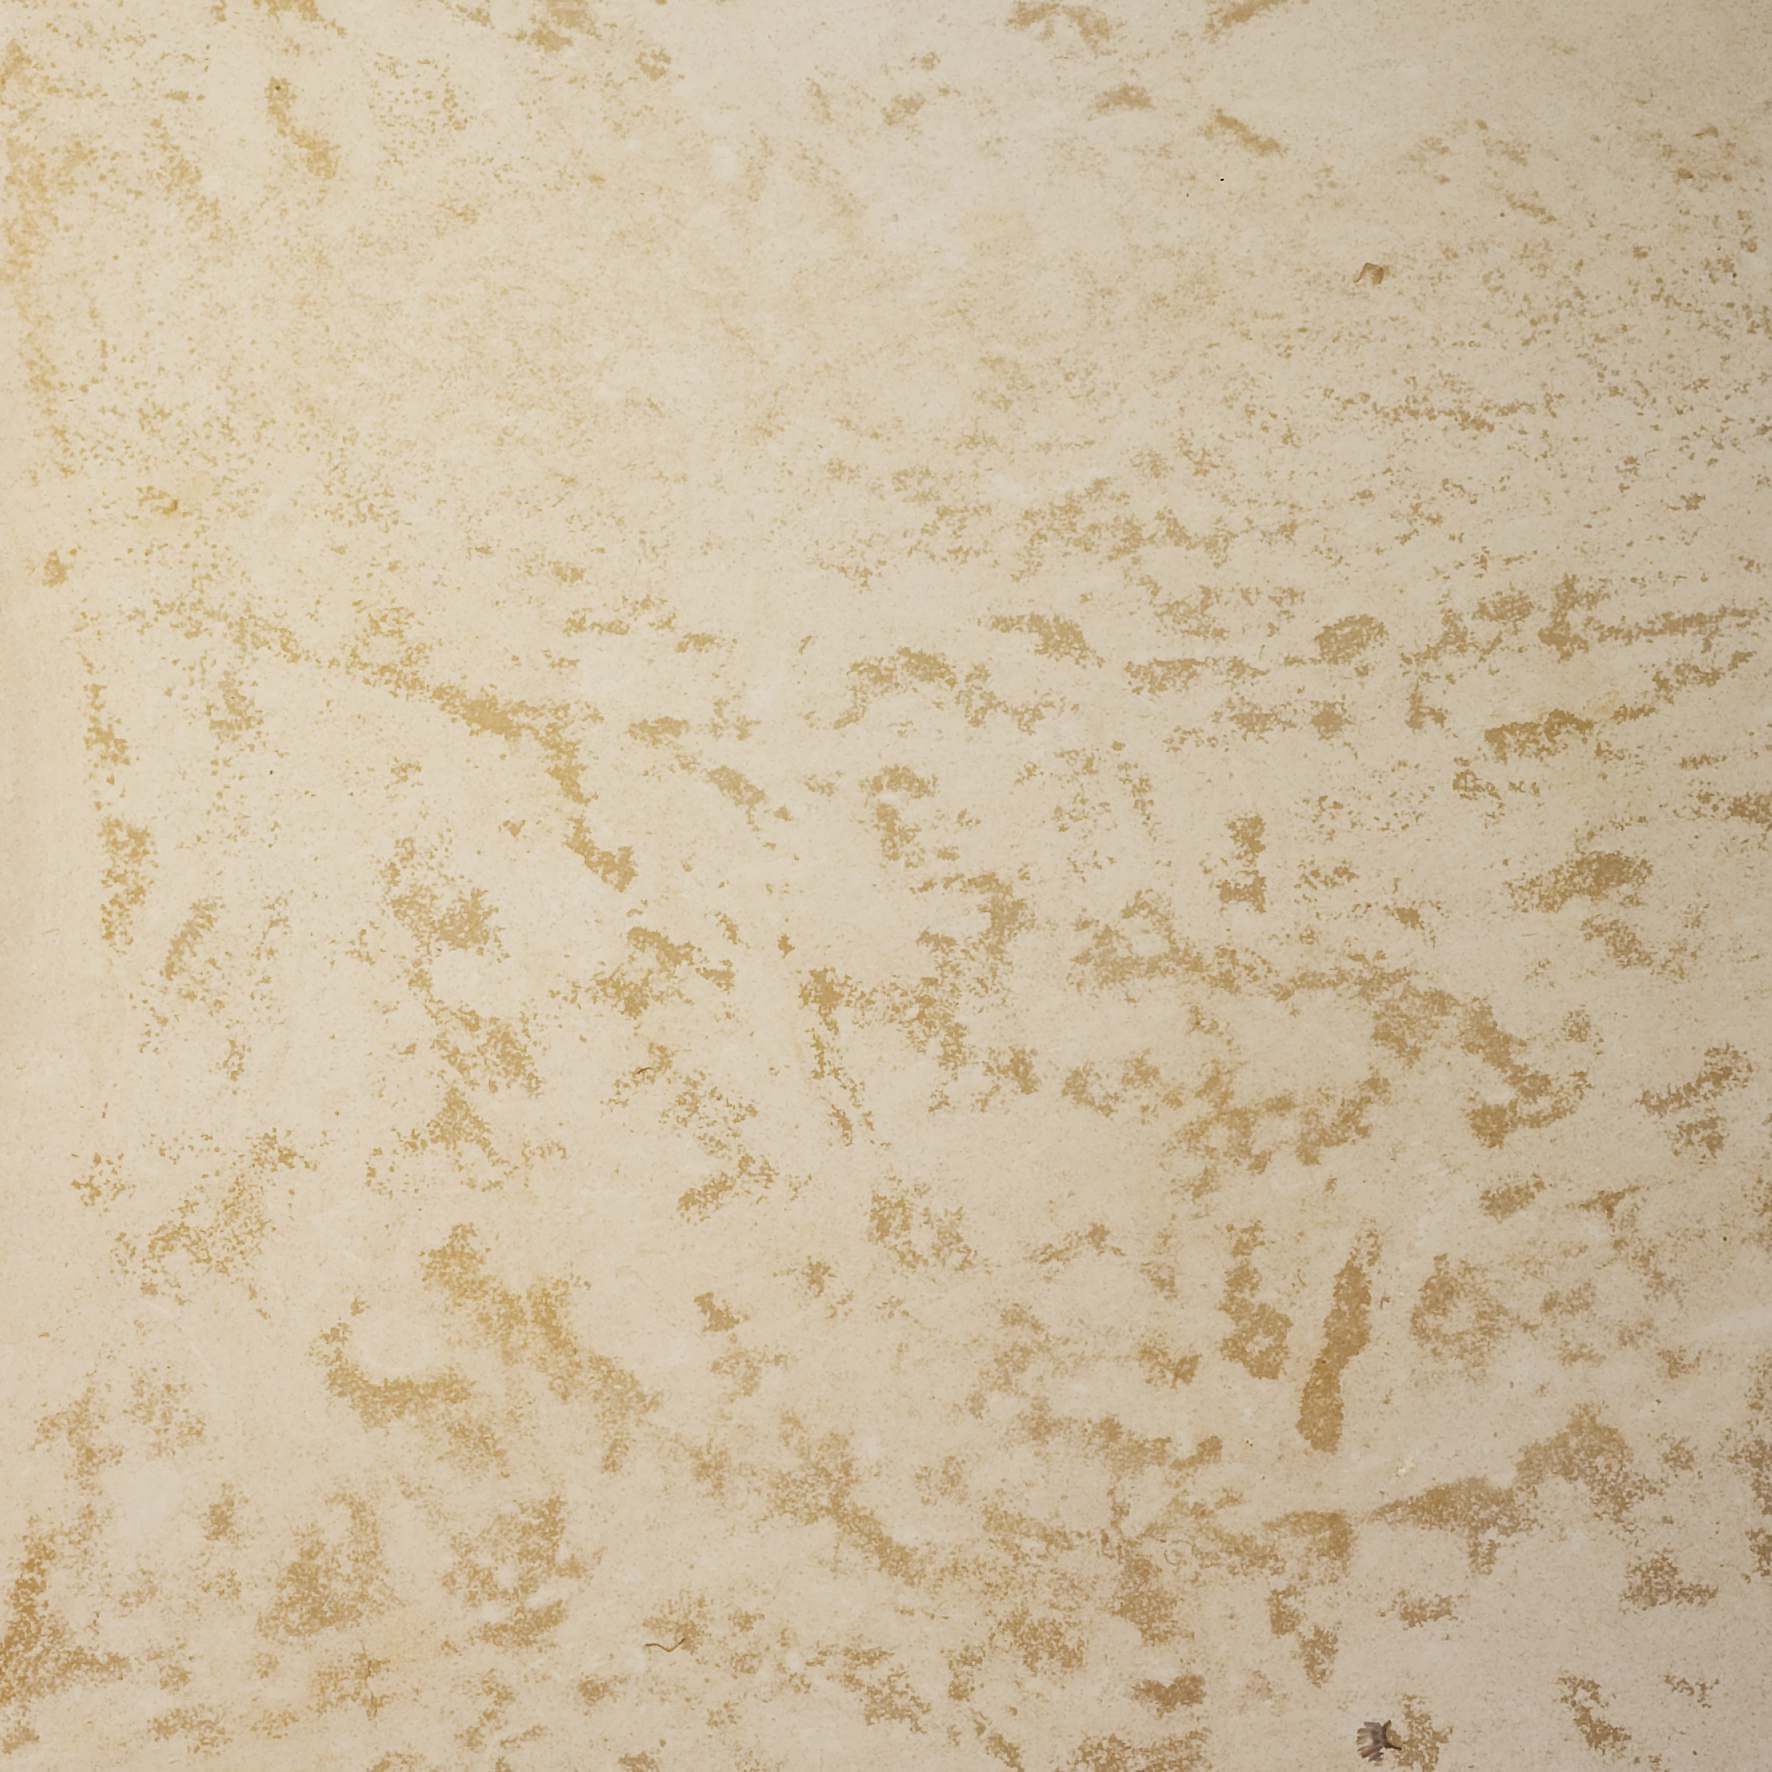 burgonde marbre beige sable